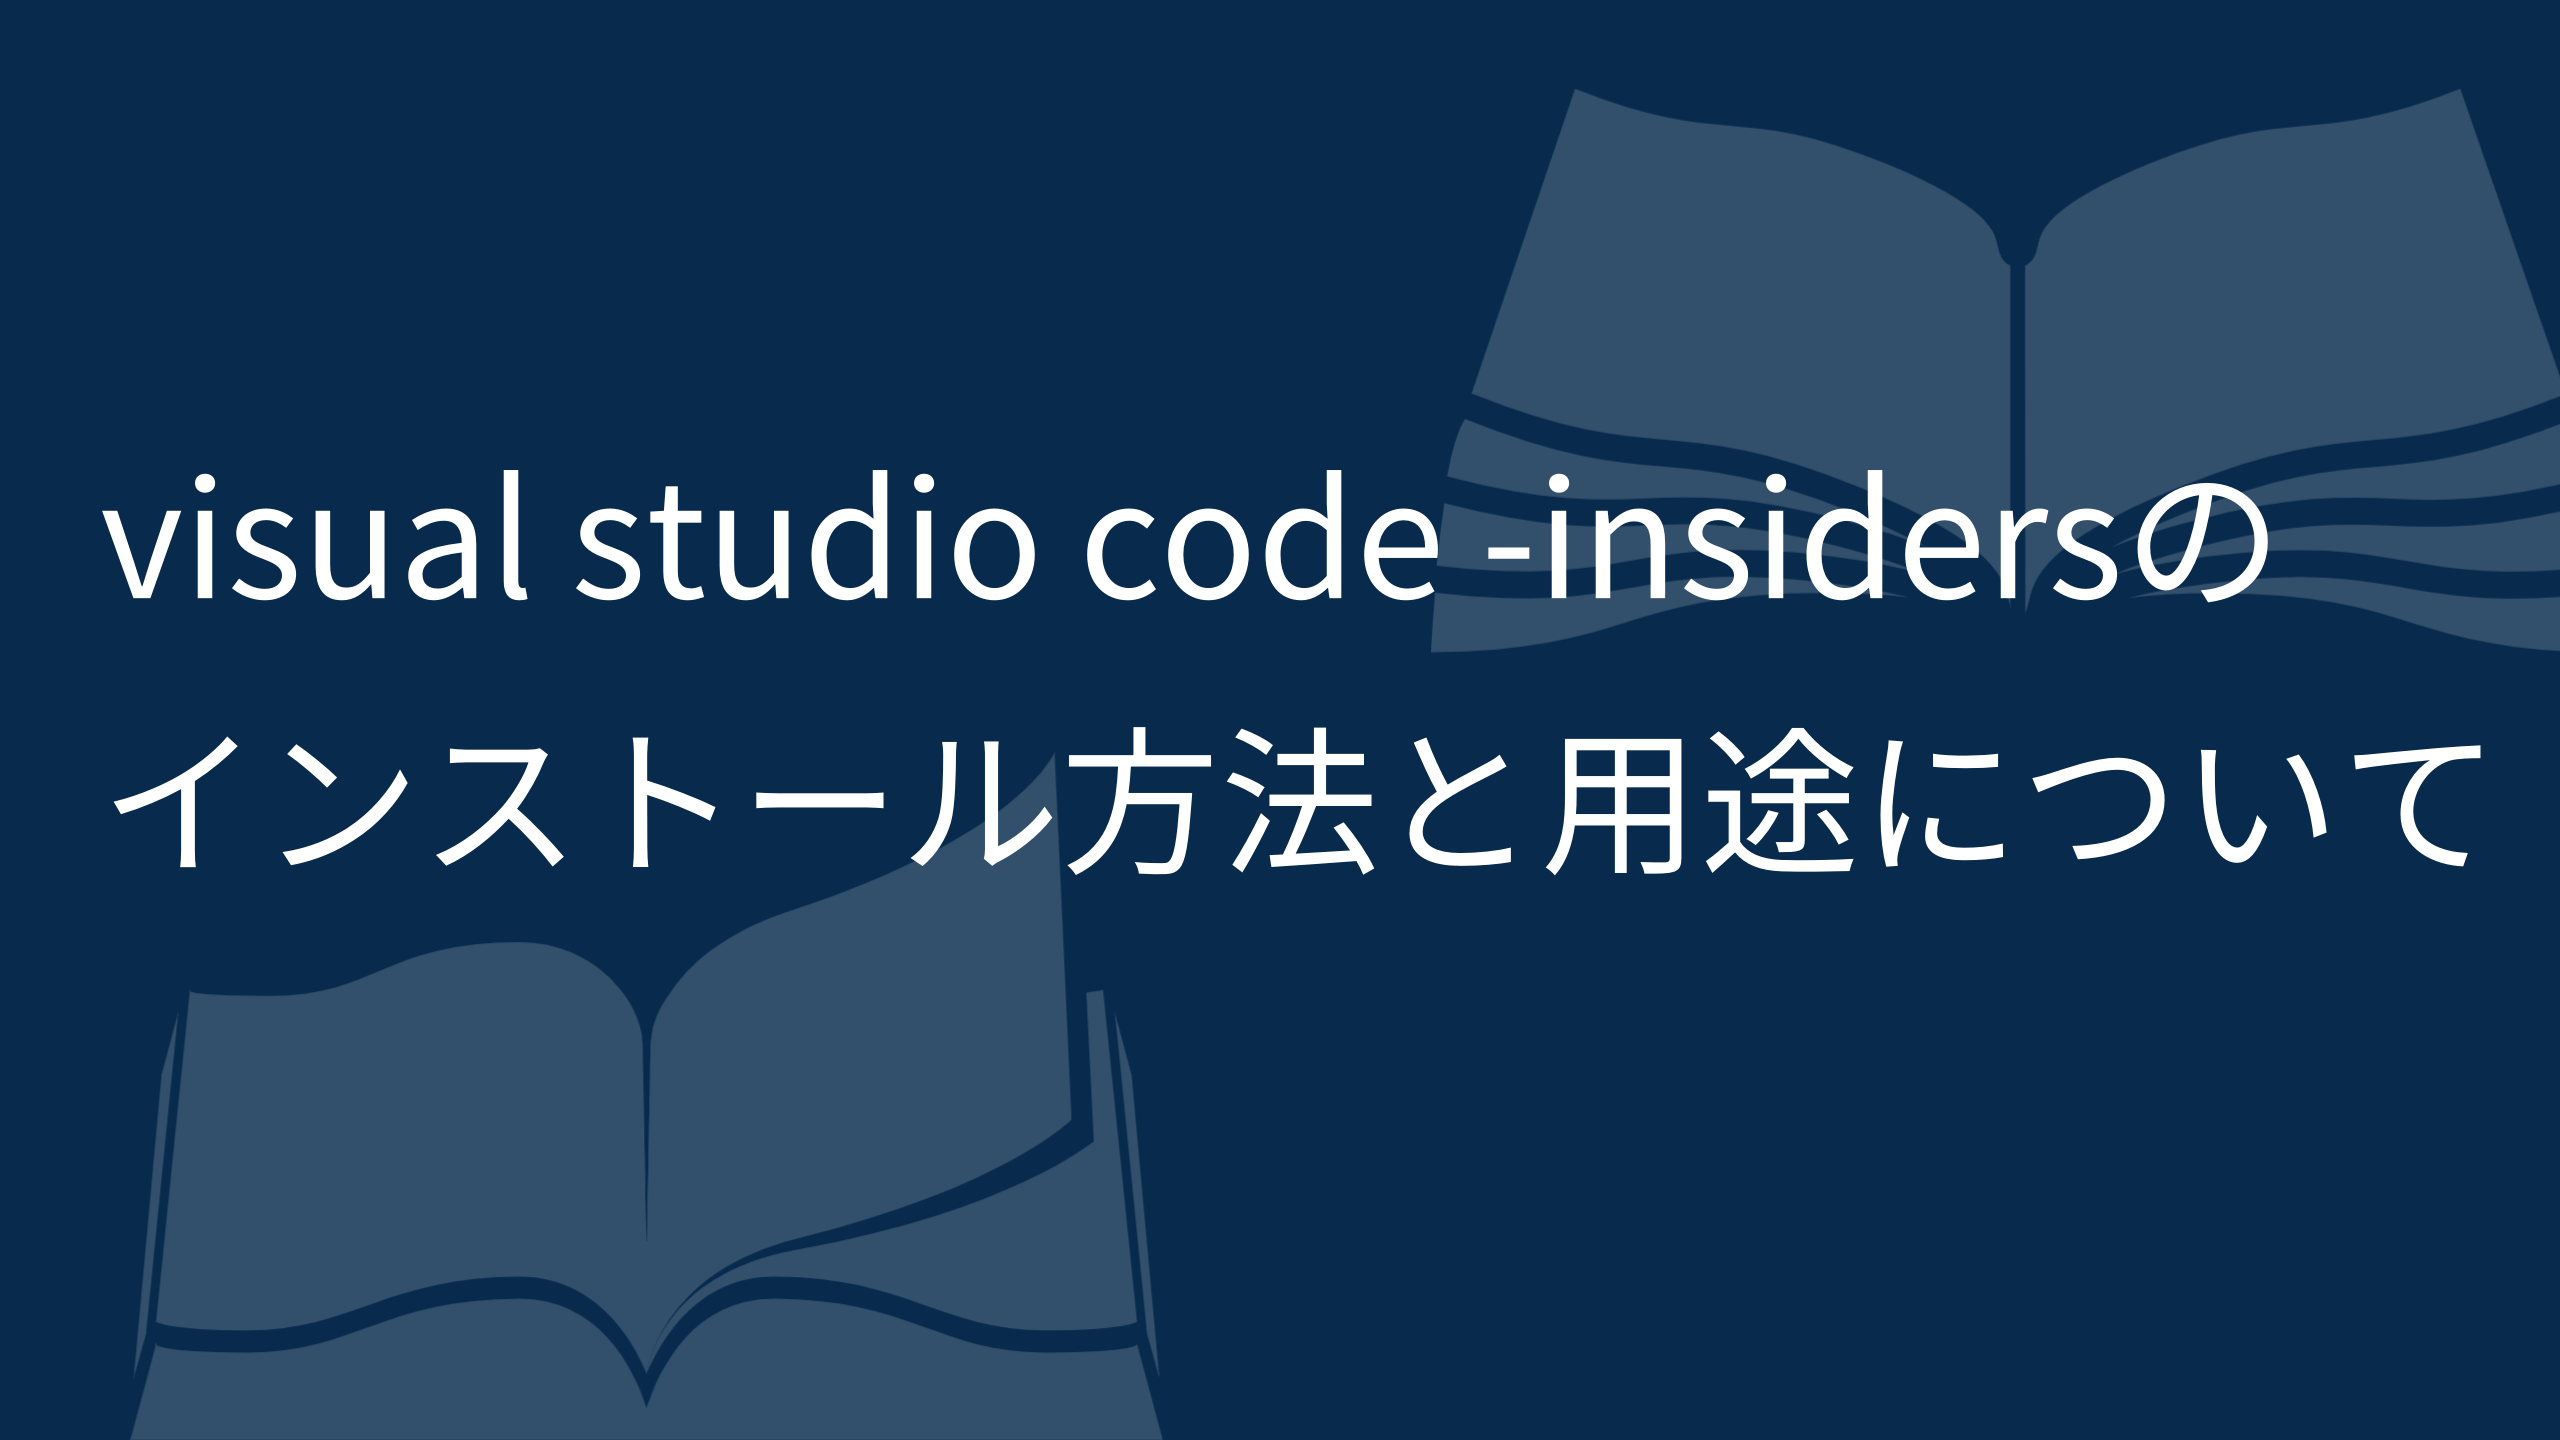 visual studio code -insidersのインストール方法と用途について